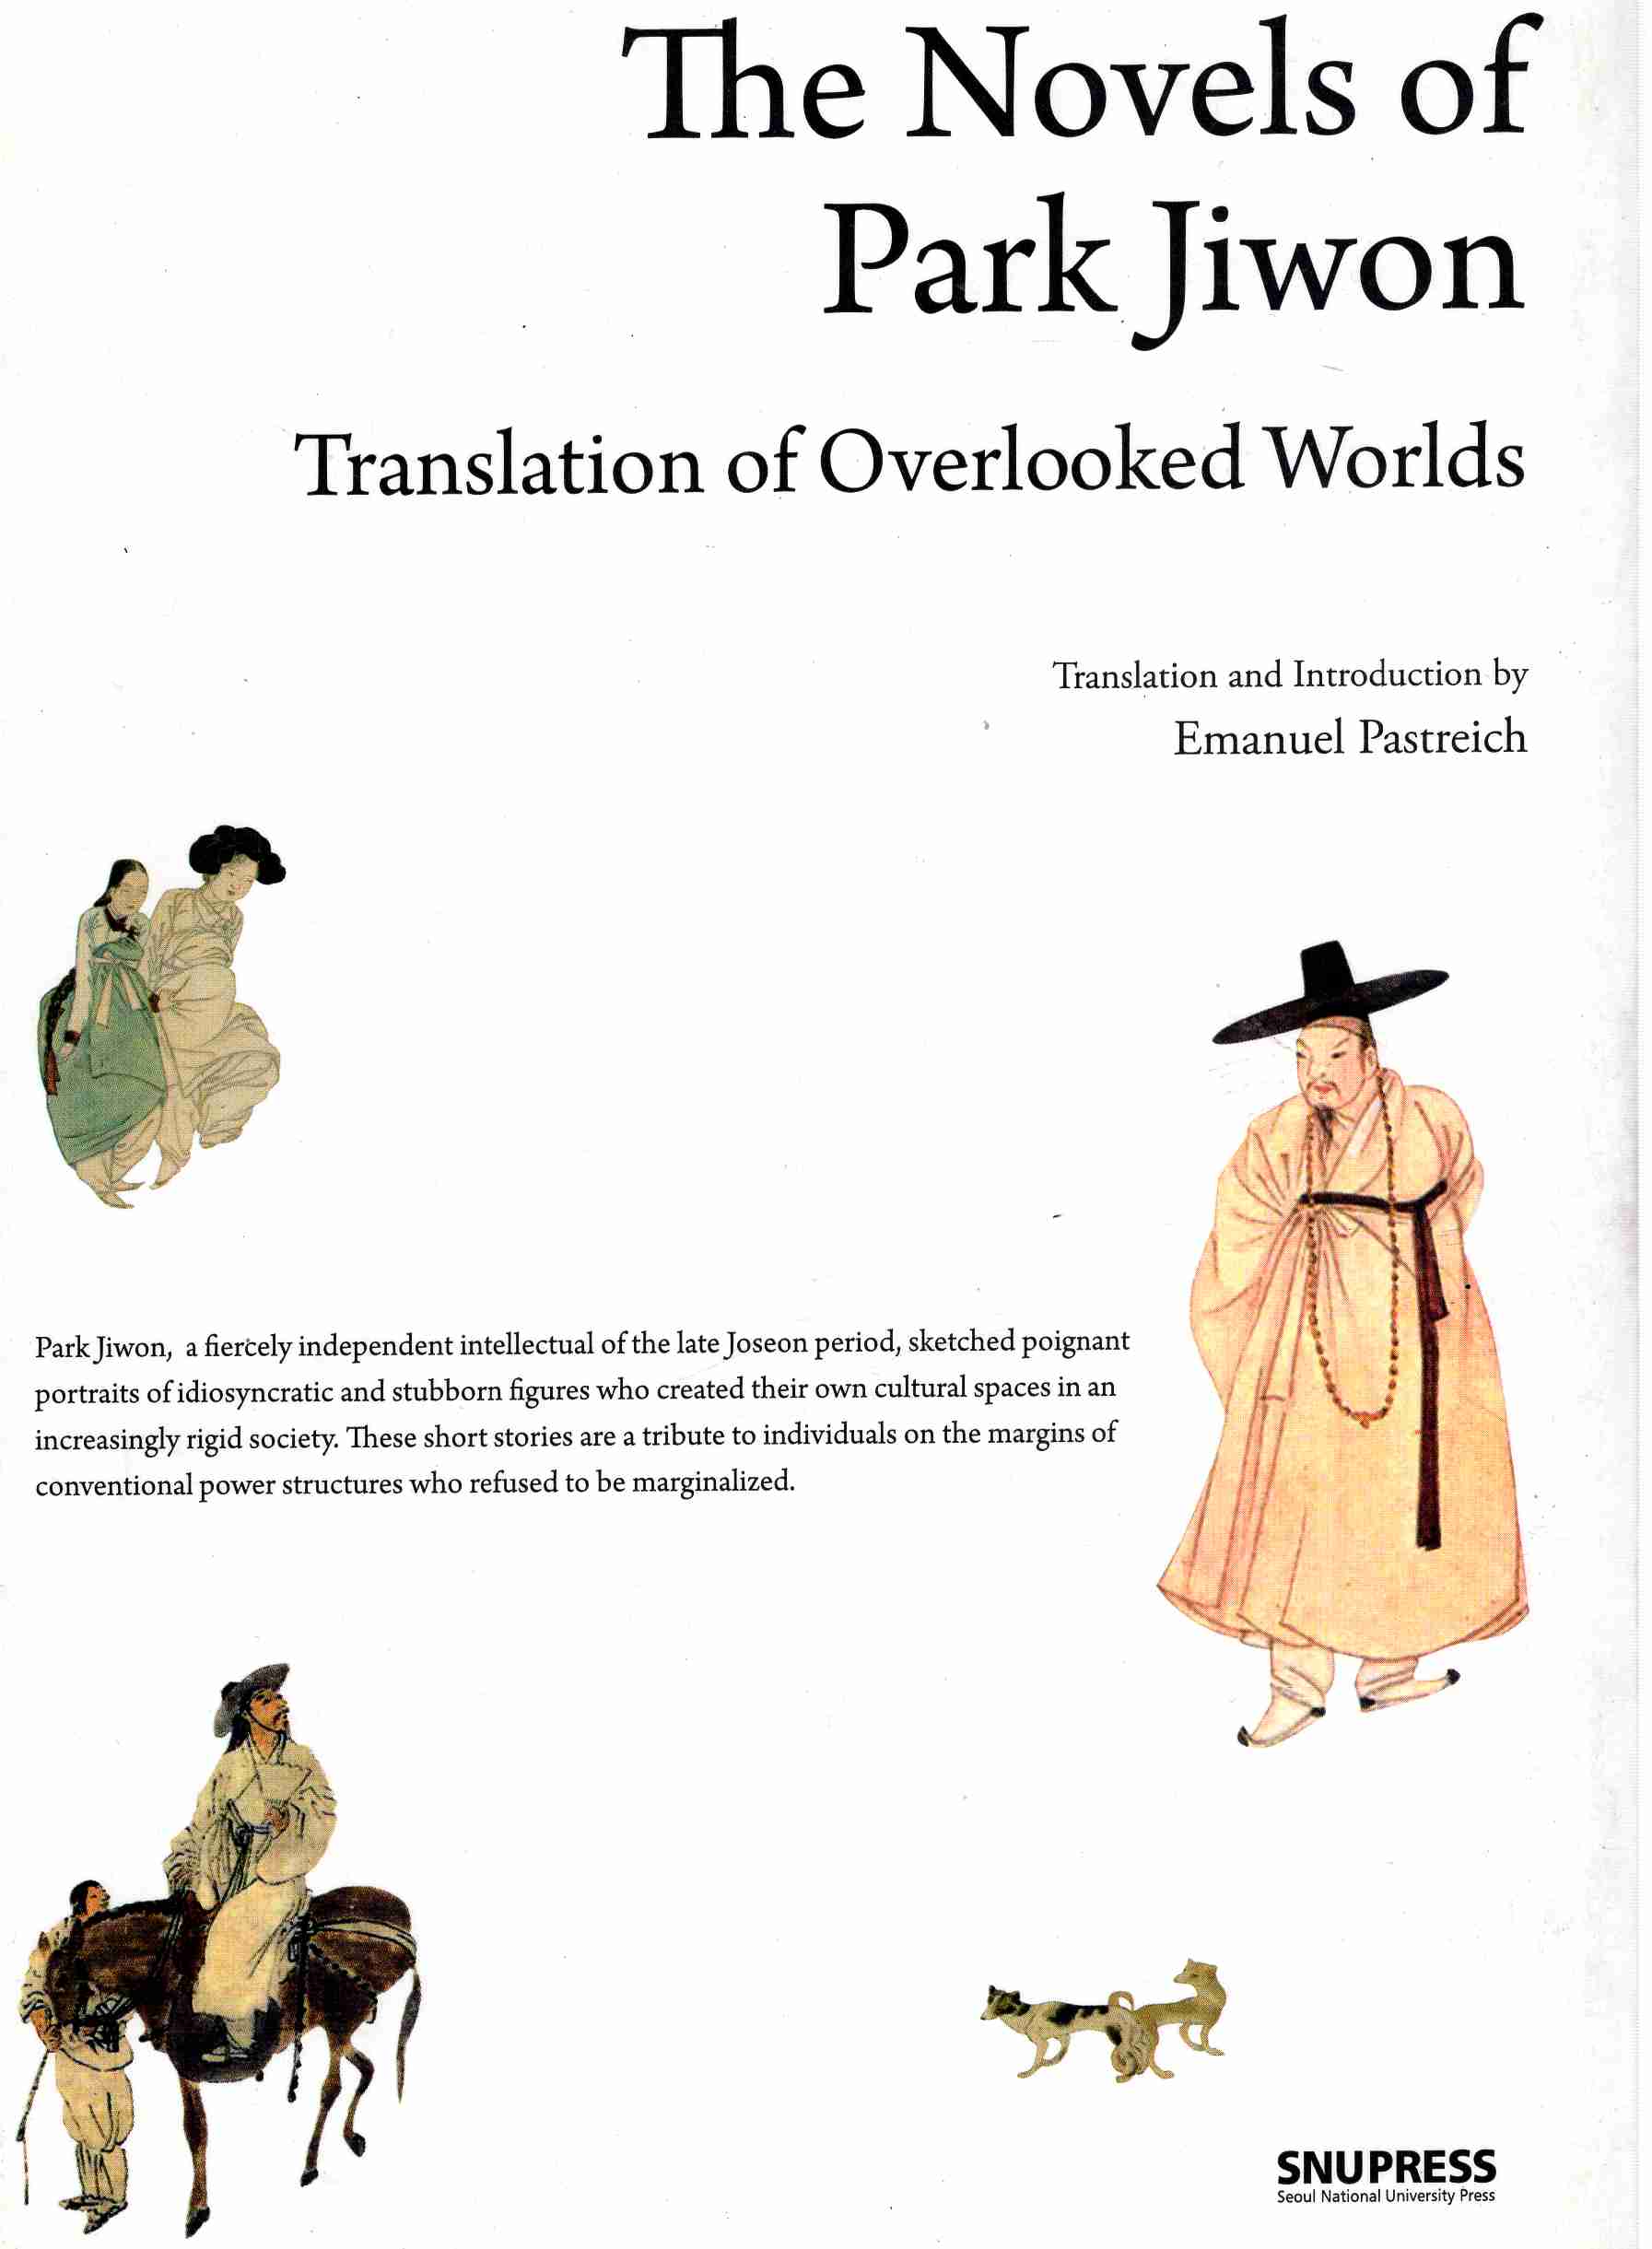 The Novels of Park Jiwon (Translation of Overlooked Worlds)